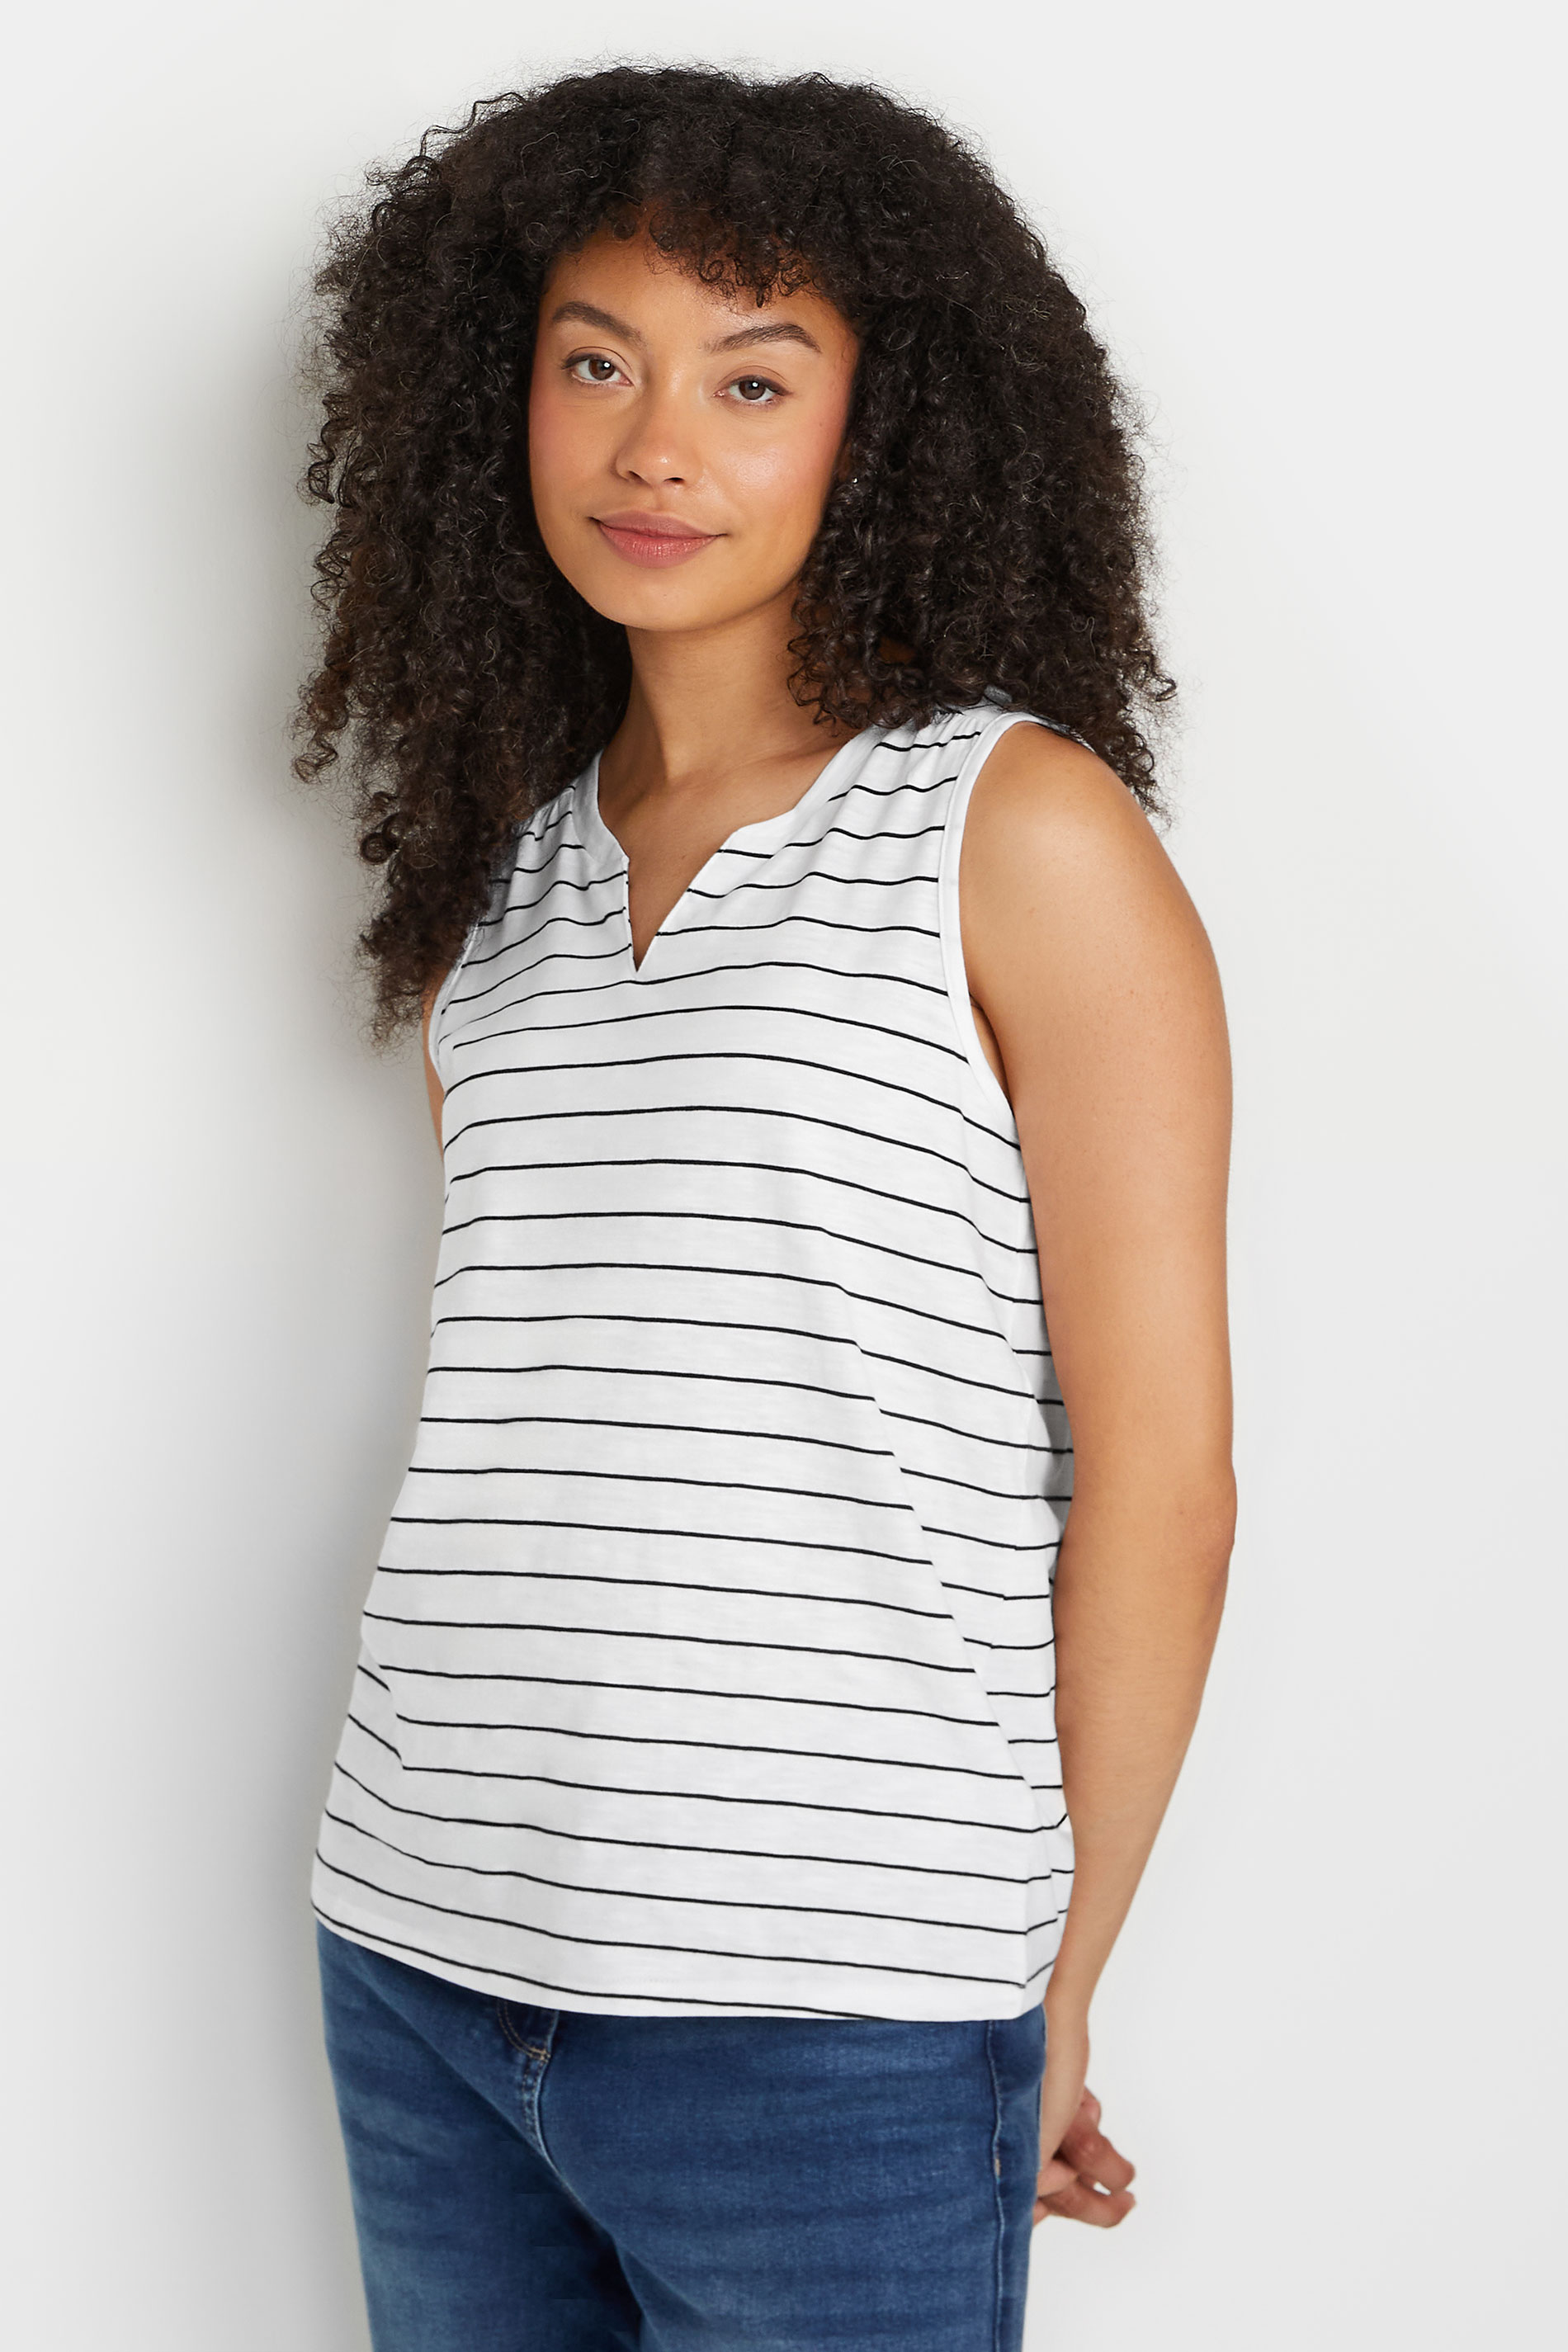 M&Co White Striped Sleeveless Notch Neck Cotton Vest Top | M&Co 2